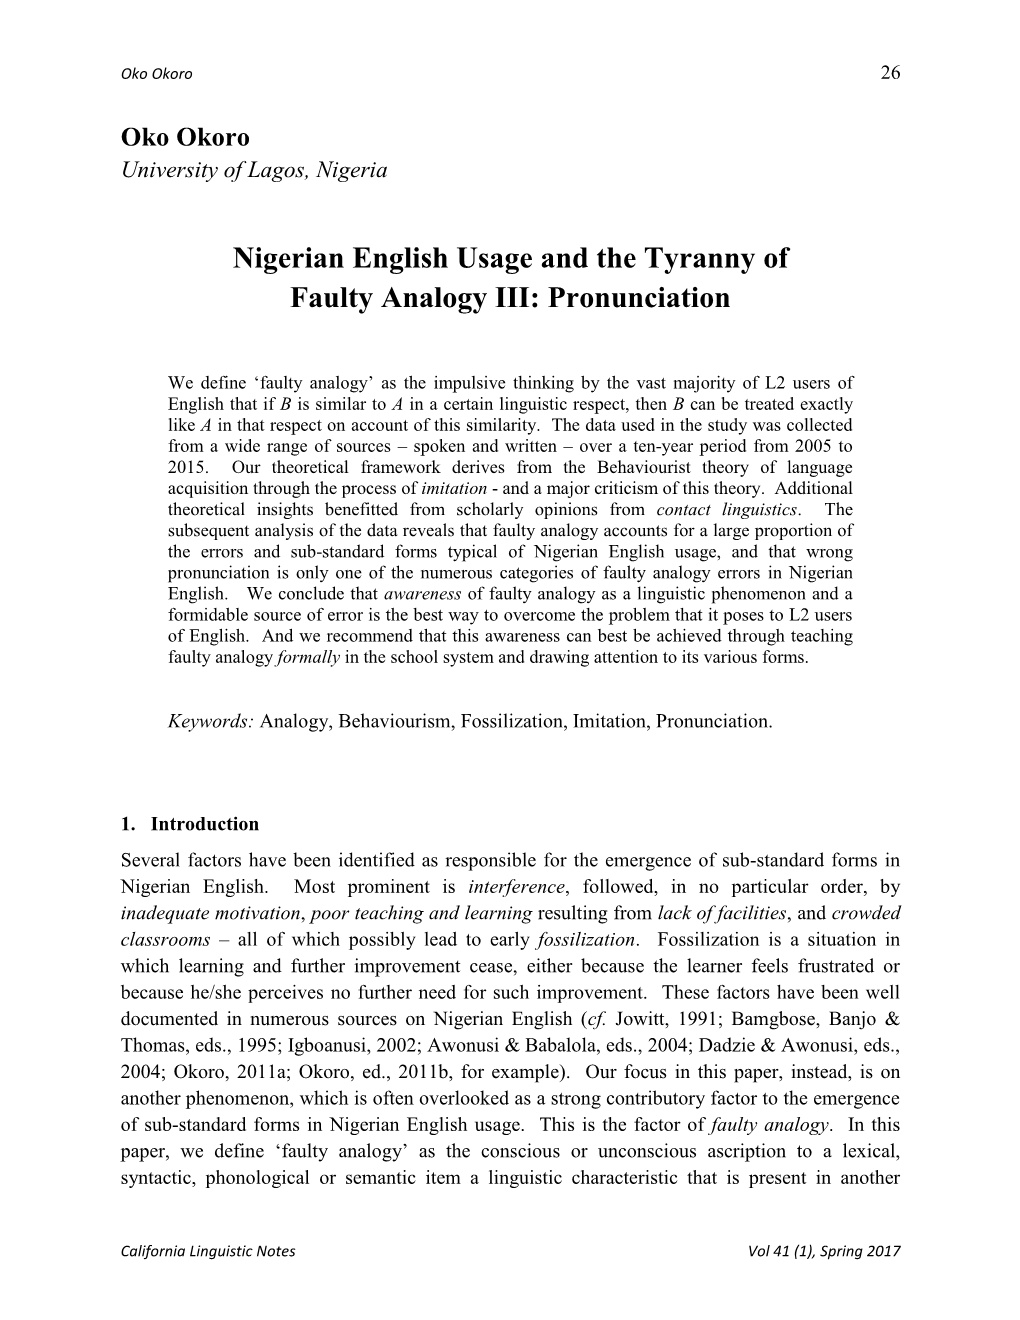 Nigerian English Usage and the Tyranny of Faulty Analogy III: Pronunciation